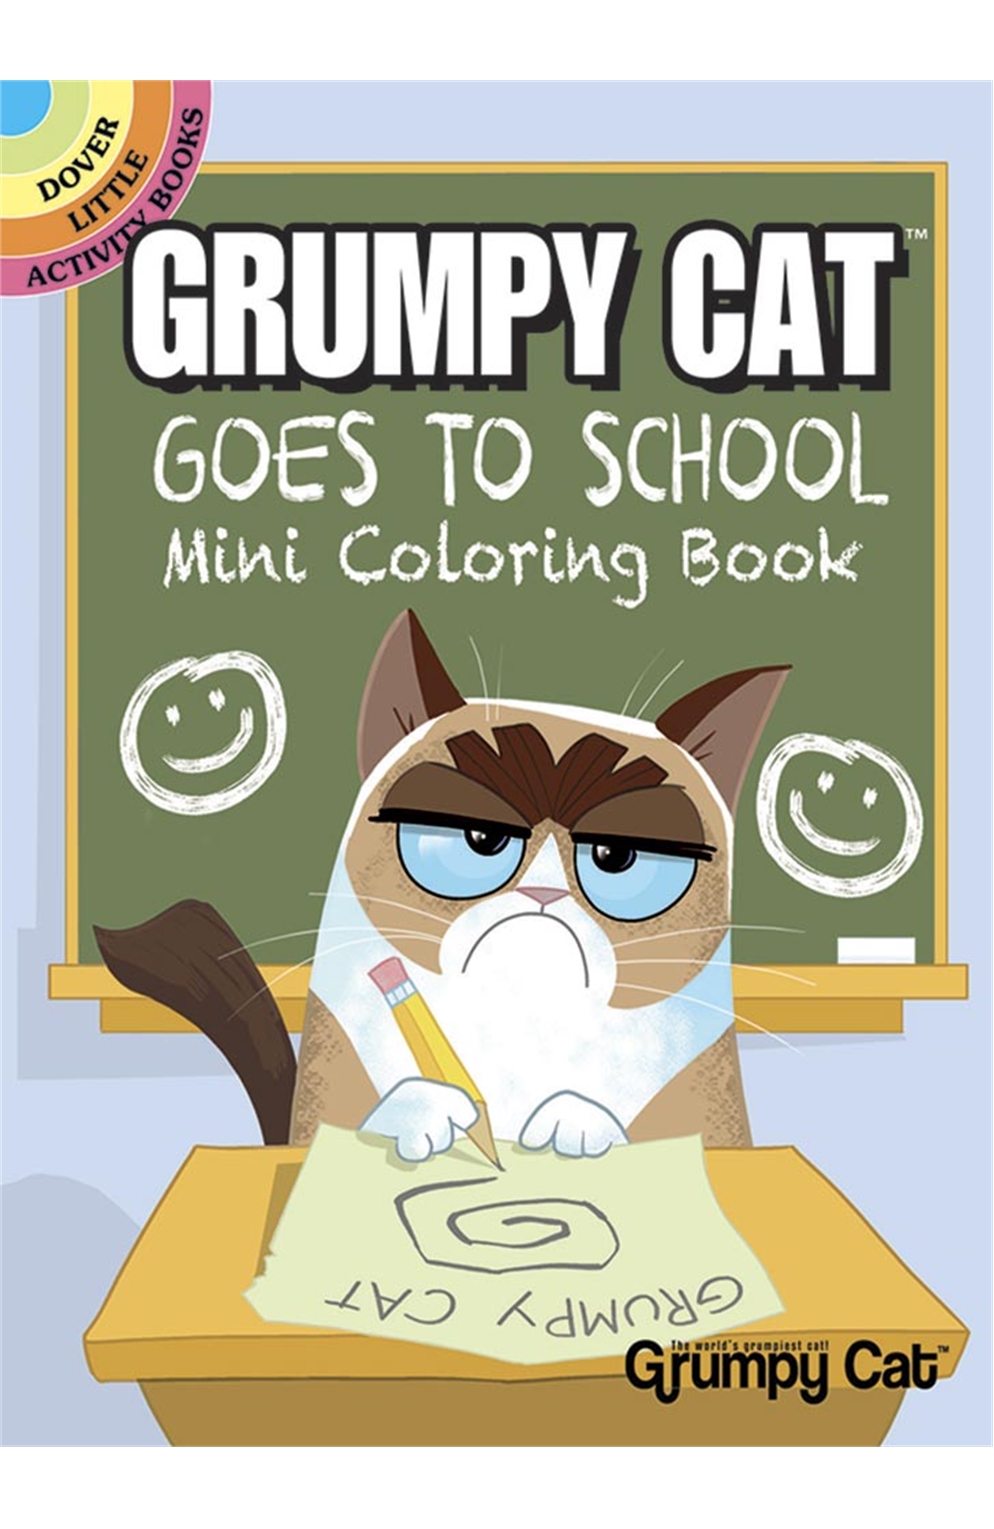 Grumpy Cat Goes To School Mini Coloring Book